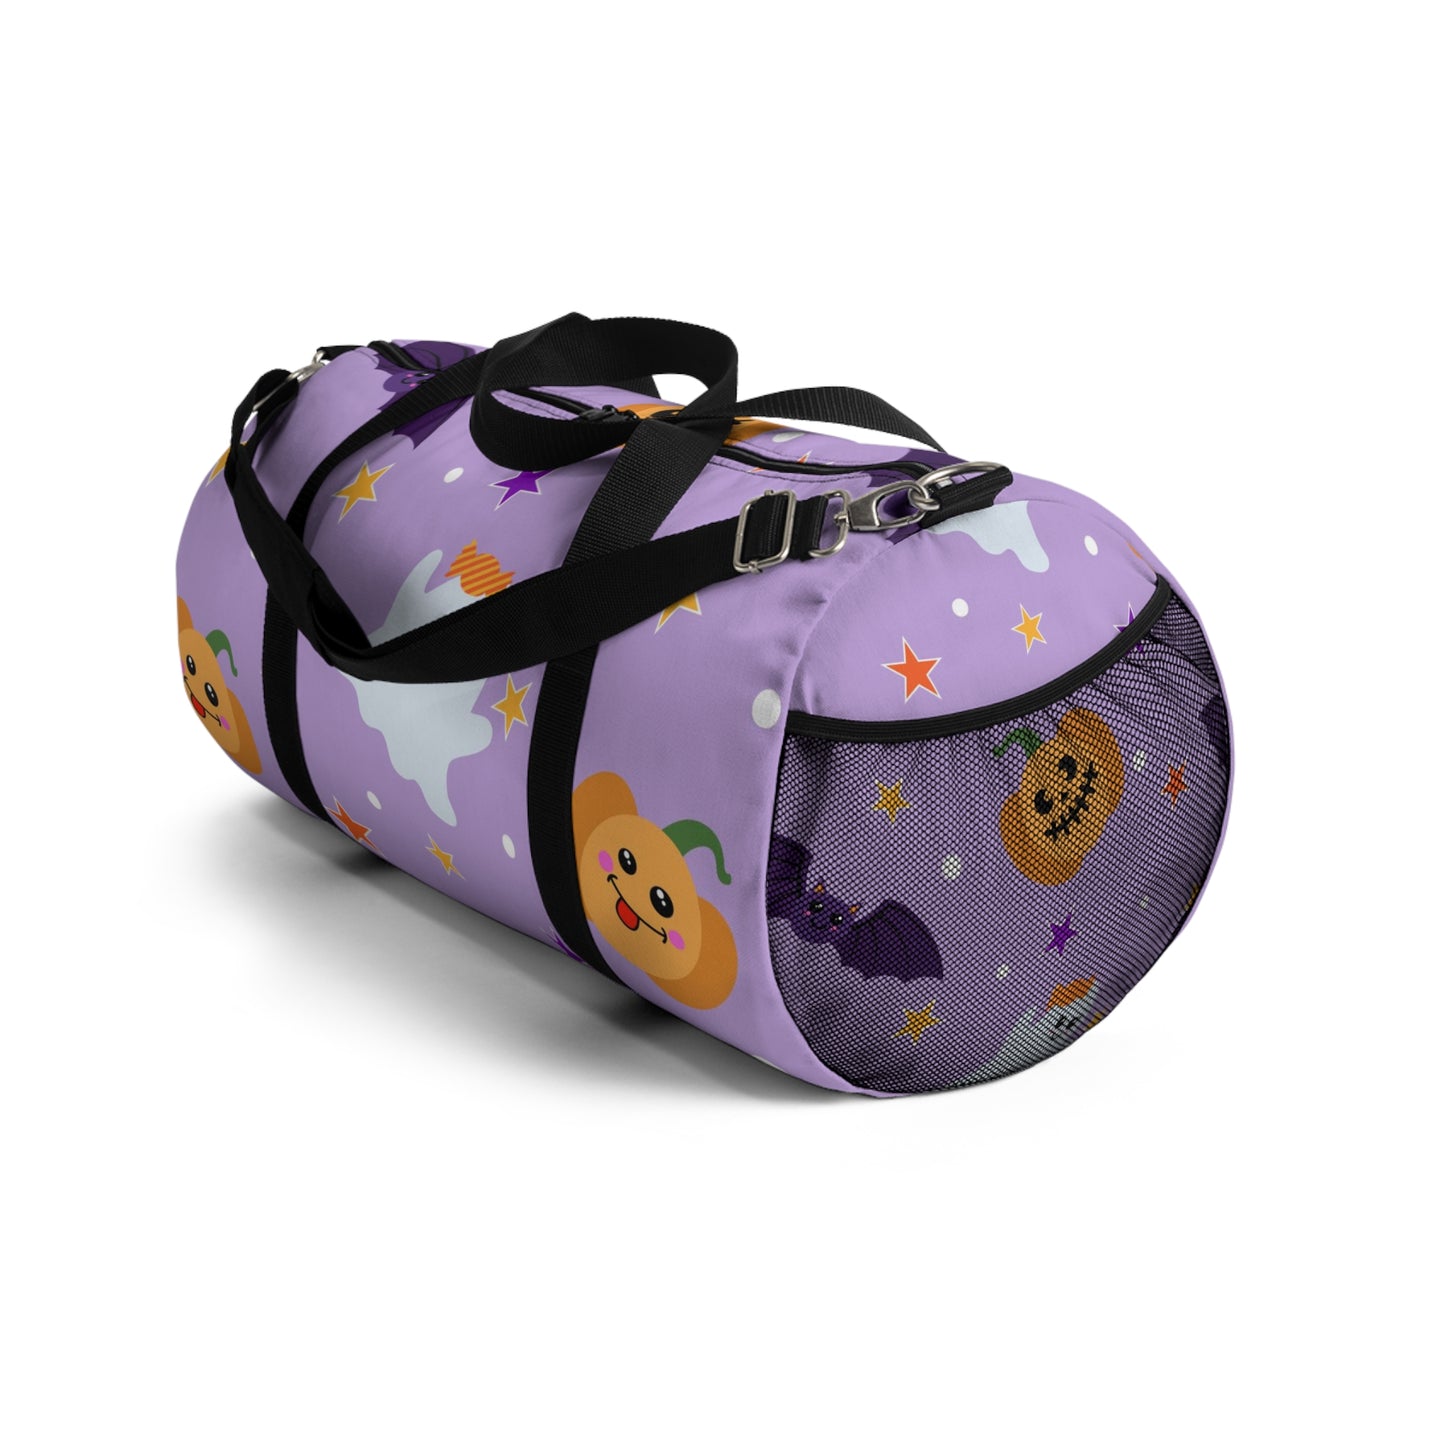 The Cutest Halloween Duffel Bag